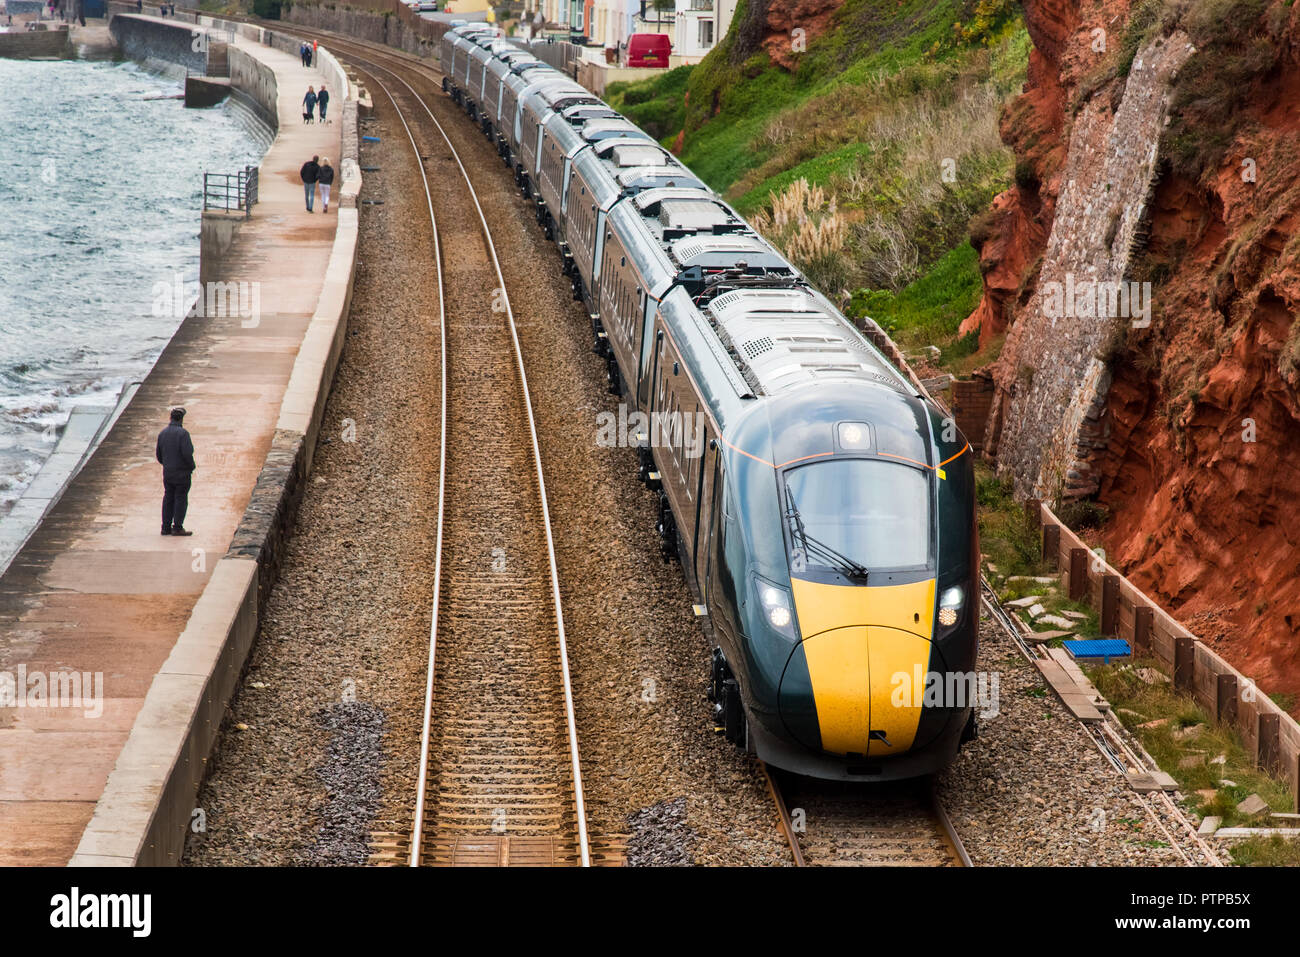 DAWLISH, DEVON, UK - 04OCT2018: GWR Class 800/802 High Speed Train north of Dawlish Station. Stock Photo